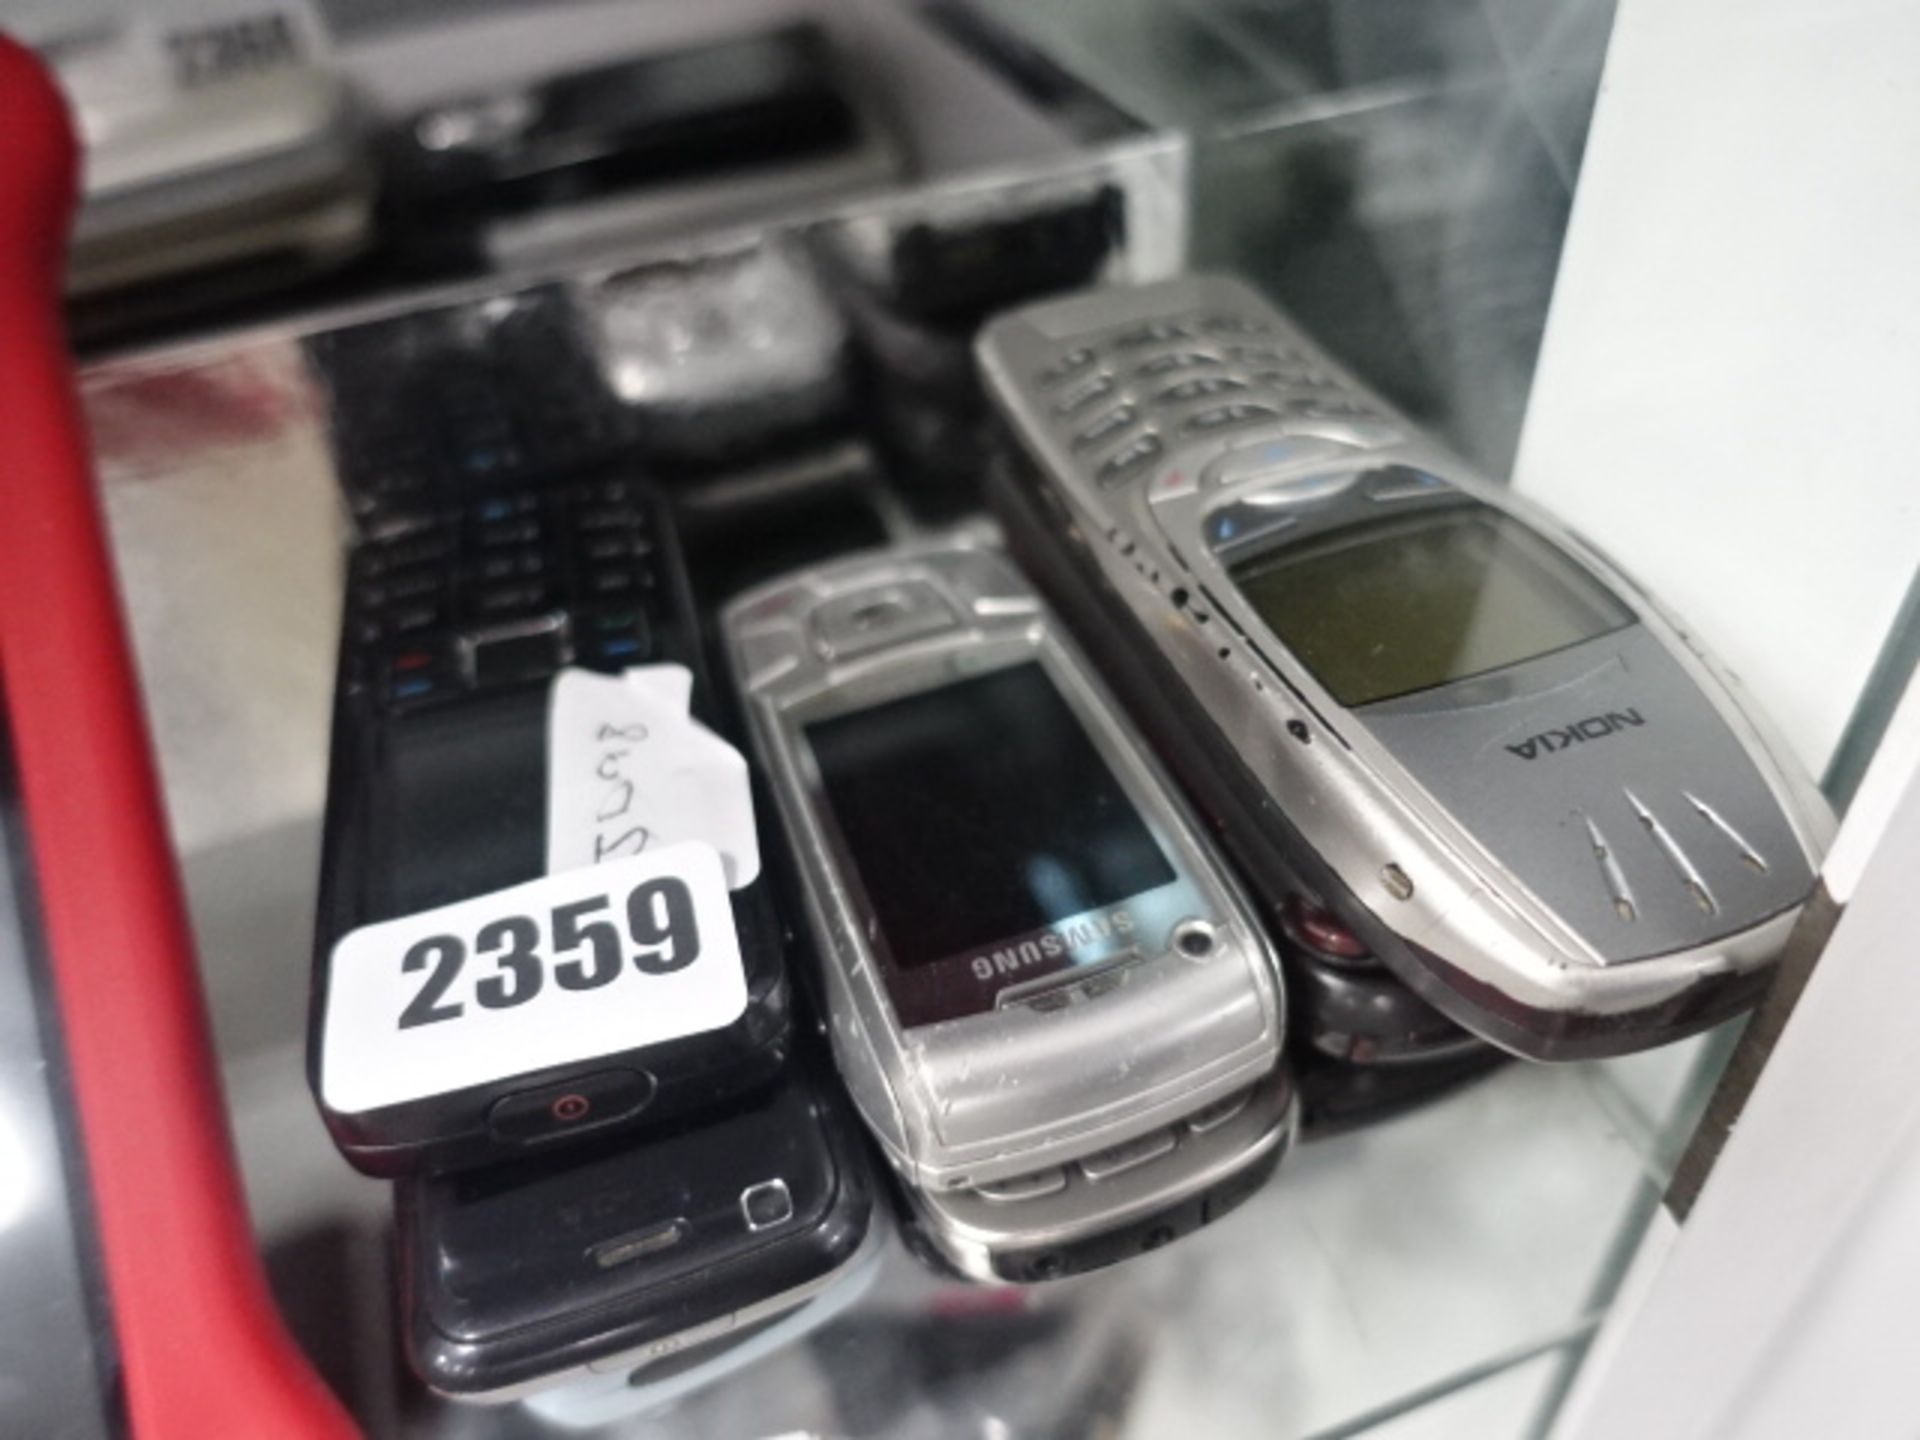 10 various mobiles including Samsung and Nokia